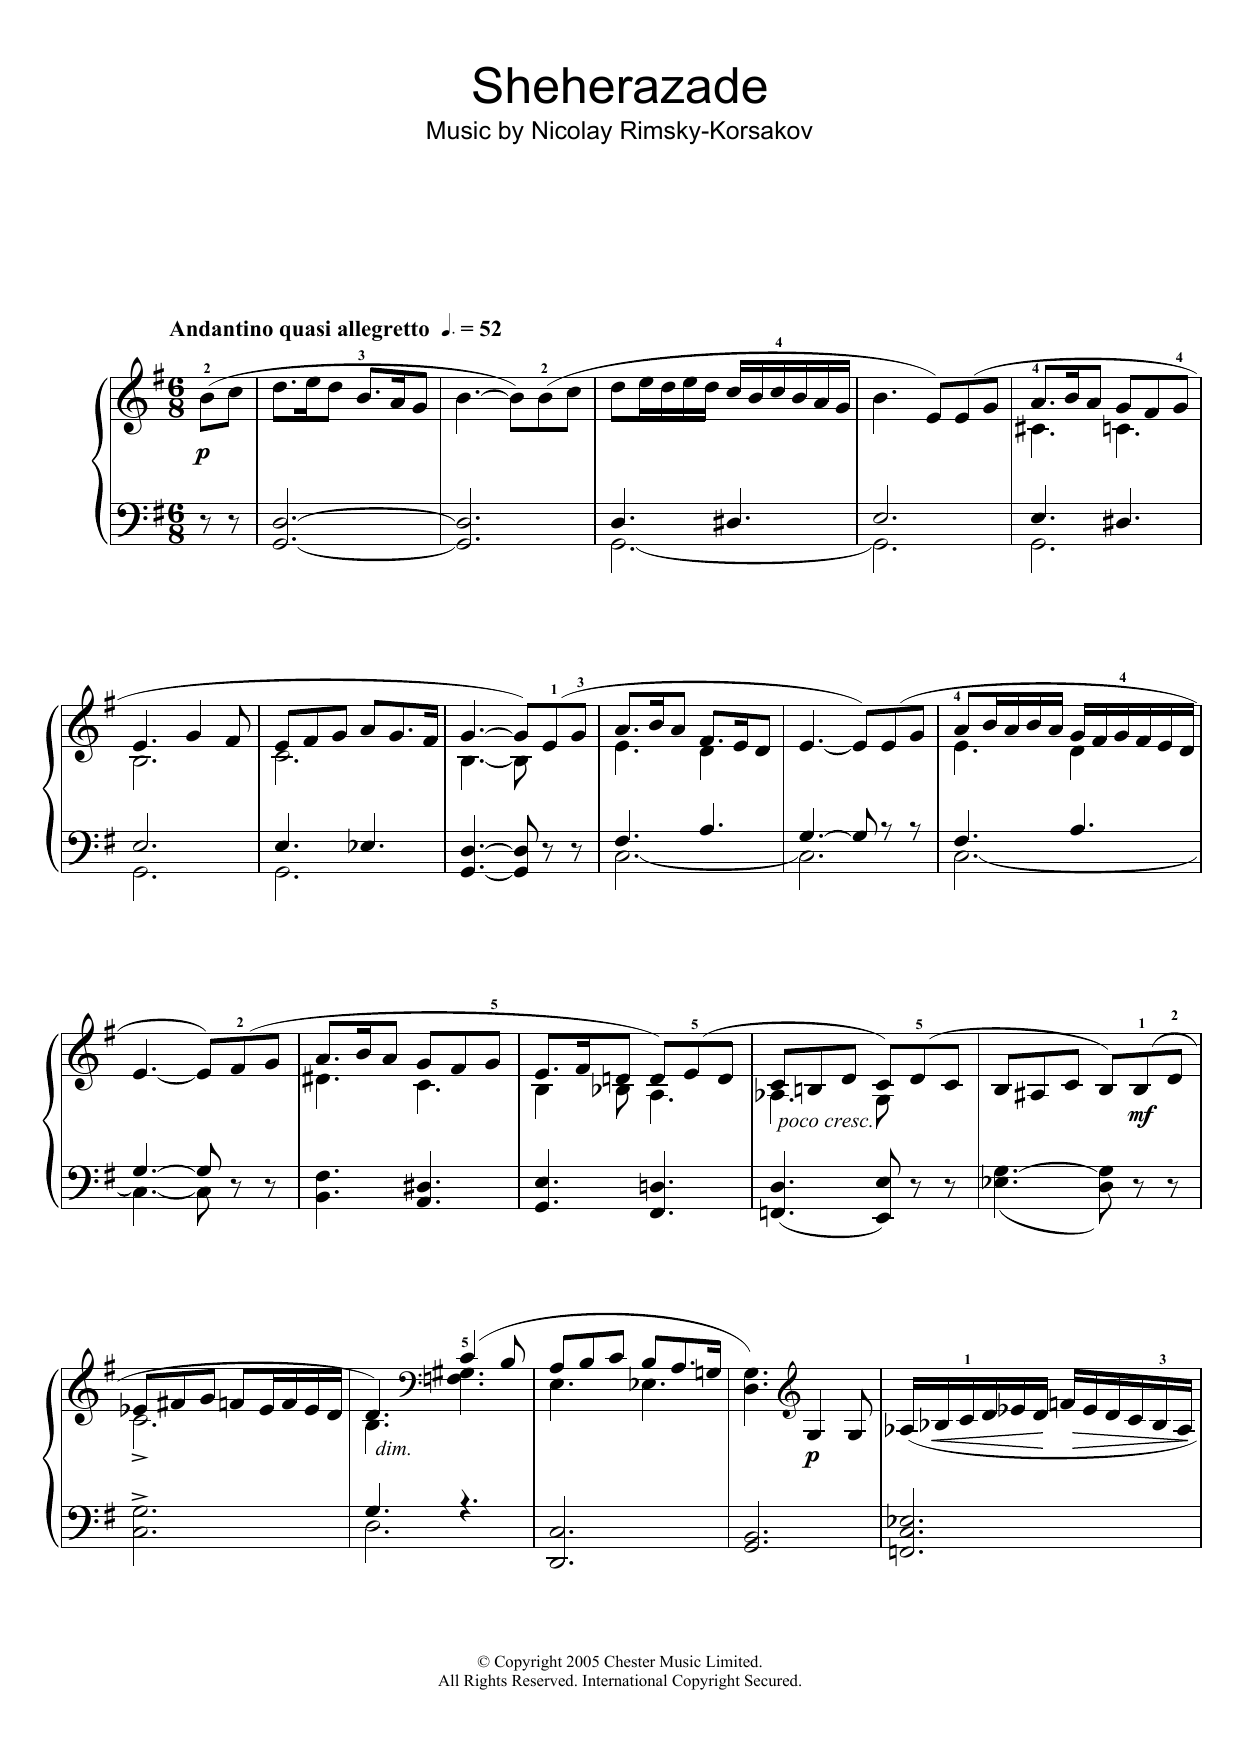 Download Nikolai Rimsky-Korsakov Sheherazade Sheet Music and learn how to play Piano PDF digital score in minutes